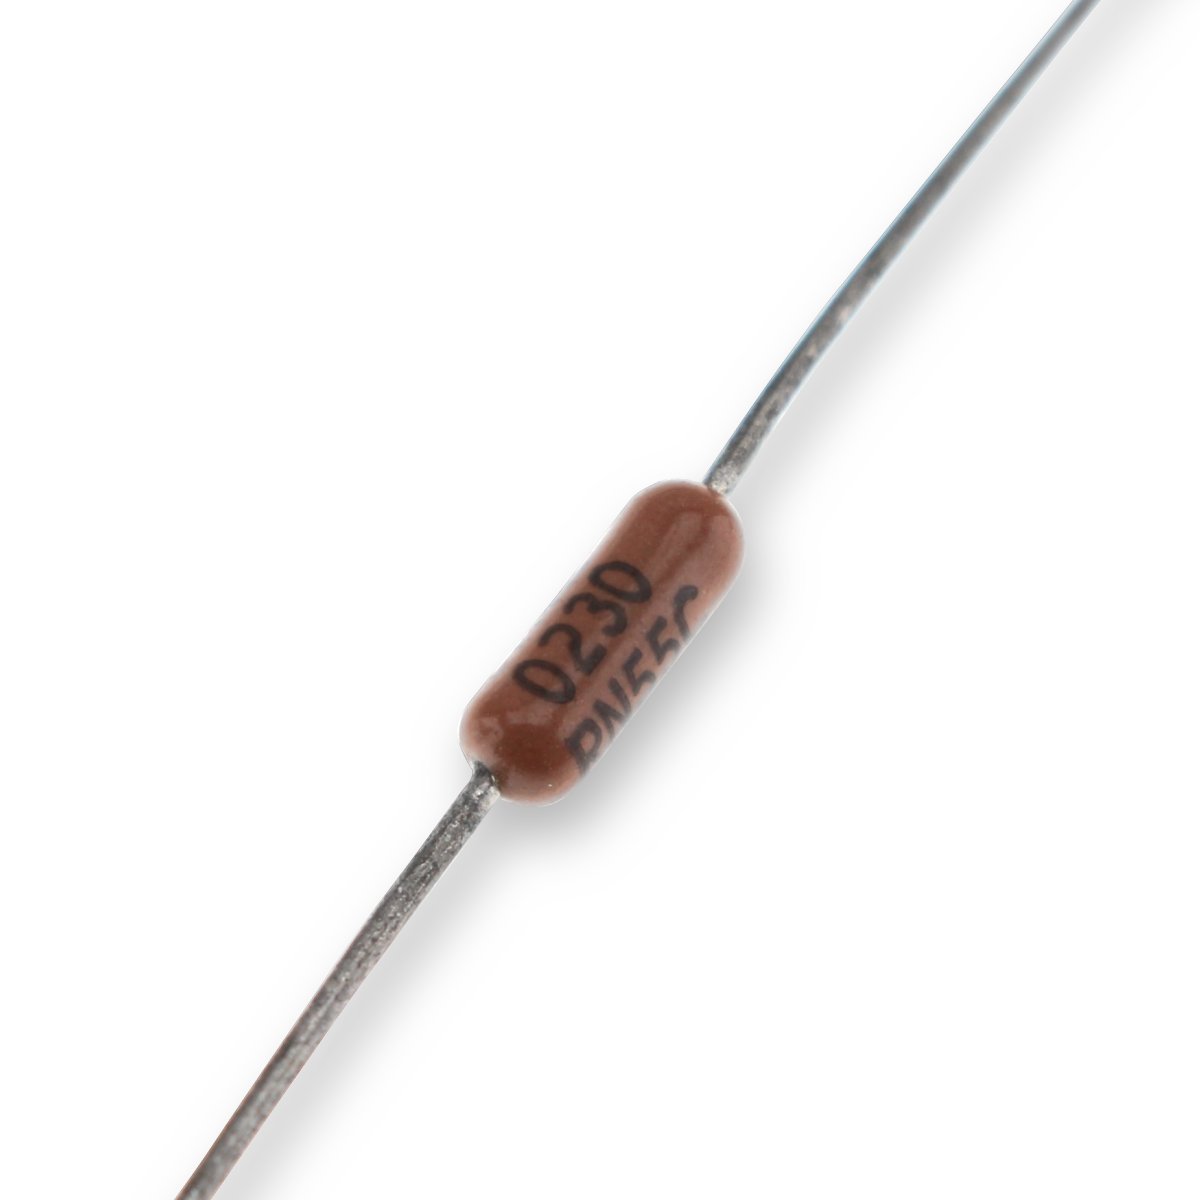 VISHAY DALE CMF55 Resistor 1% 50ppm 825 Ohm